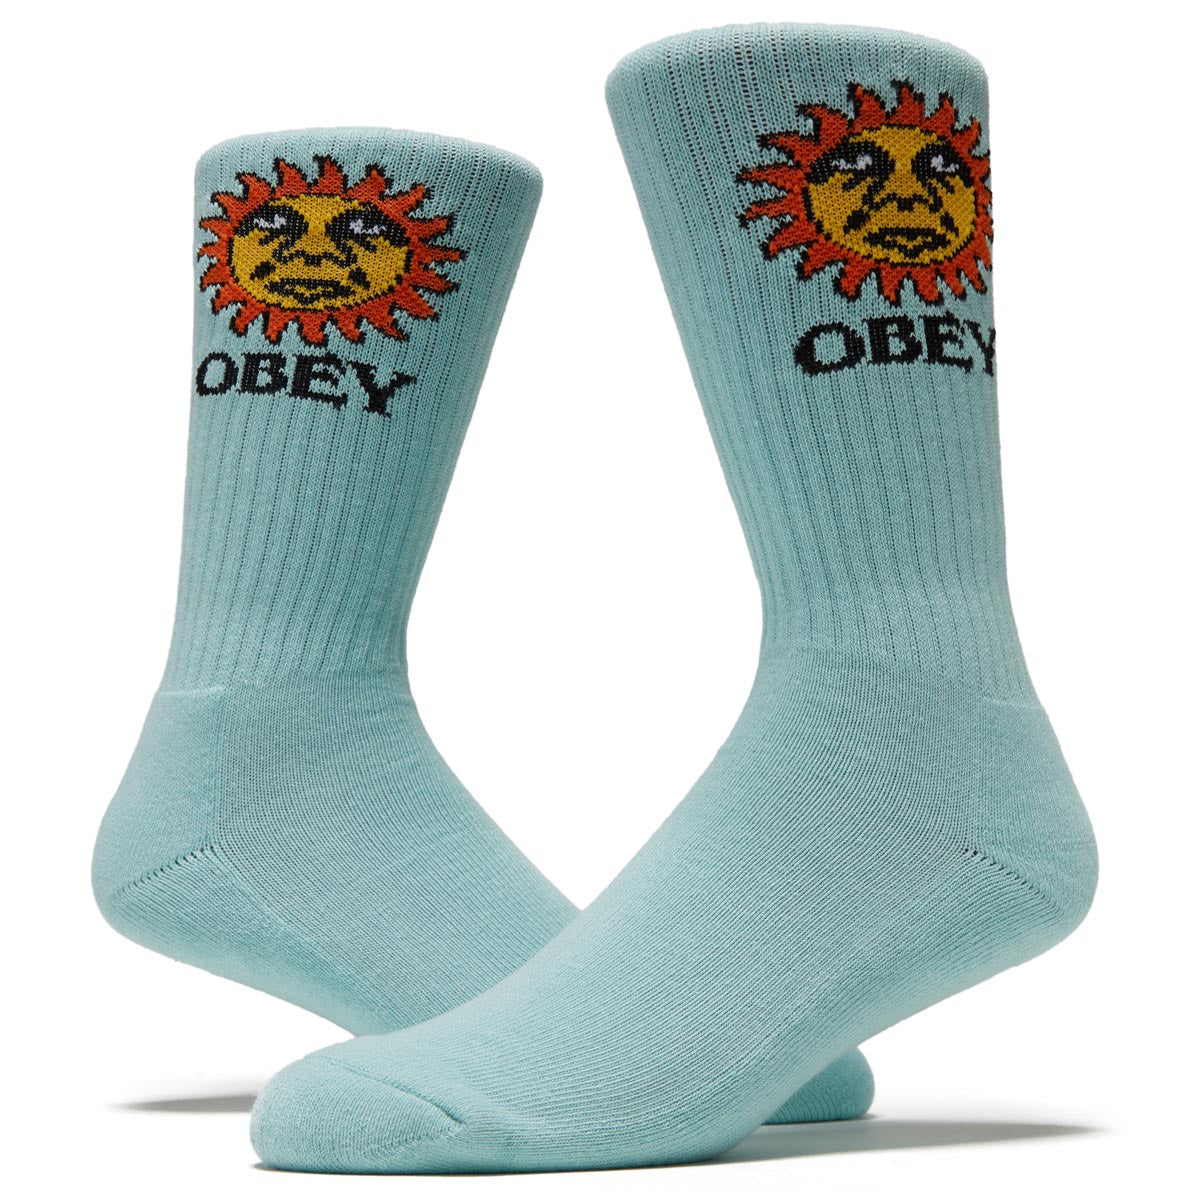 Obey Sunshine Socks - Surf Spray image 2